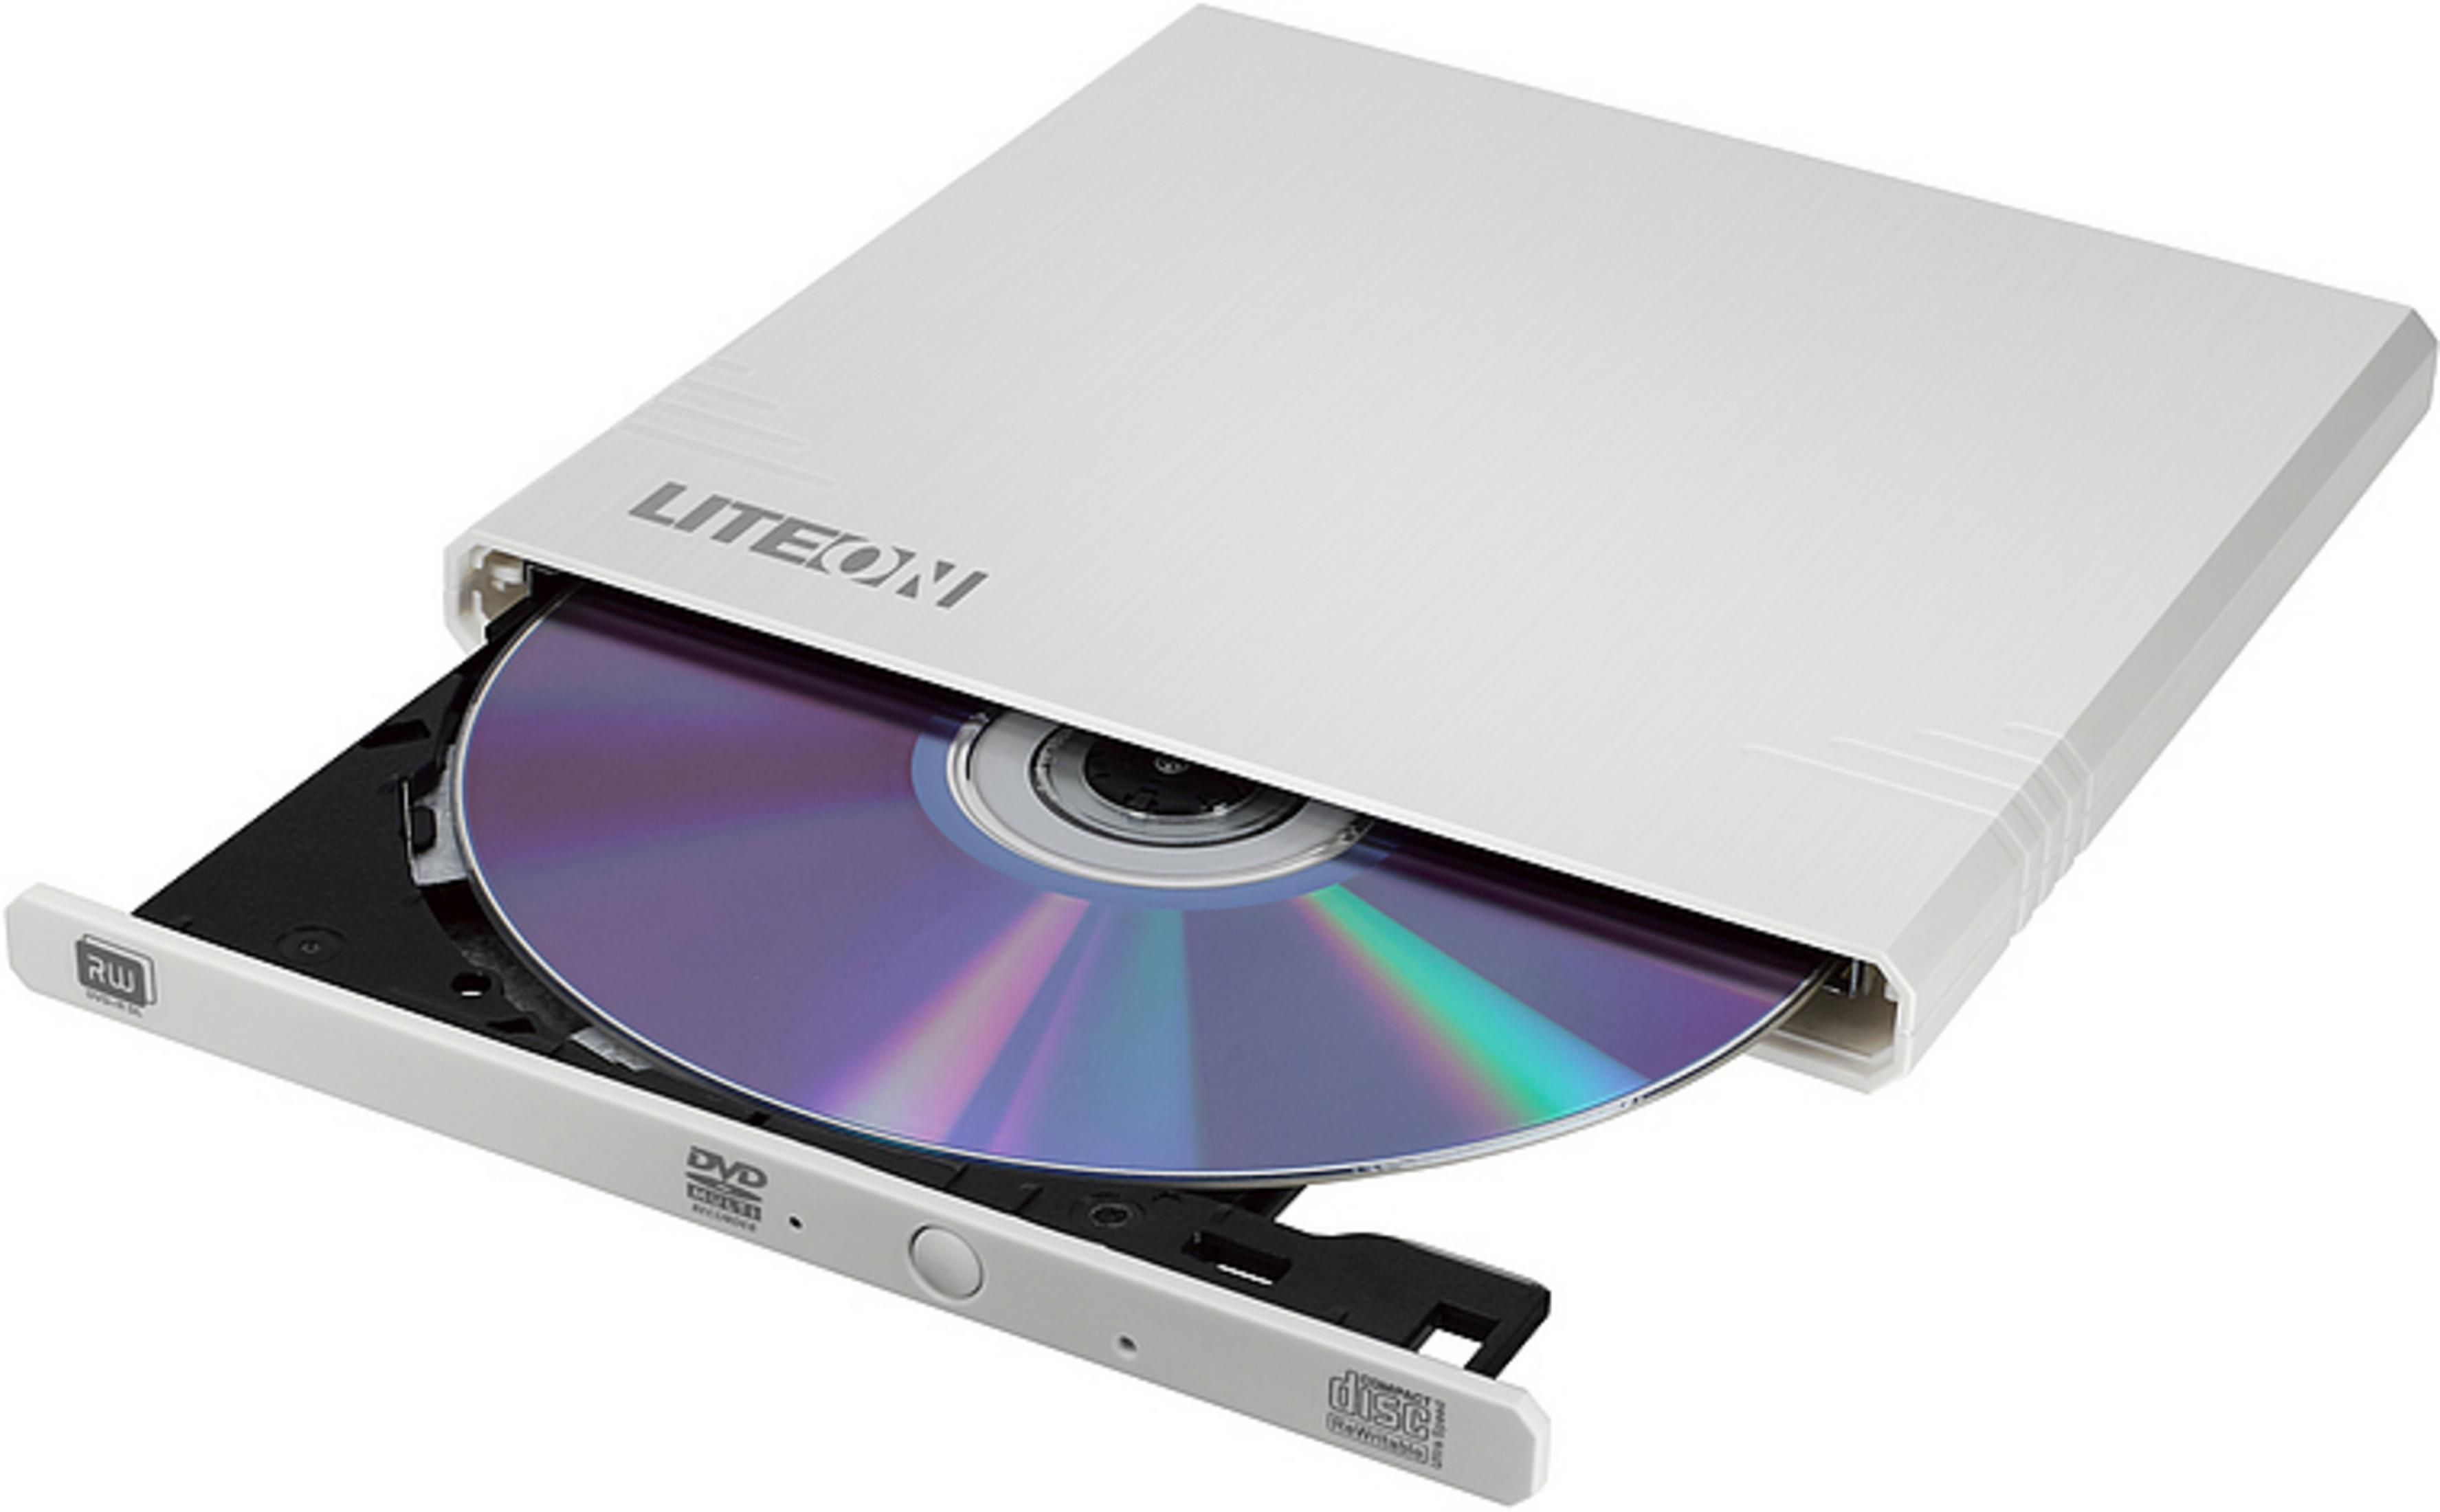 LITE-ON EXTERNAL SLIM WHITE extern CD/DVD USB DVD-RW 8X Brenner